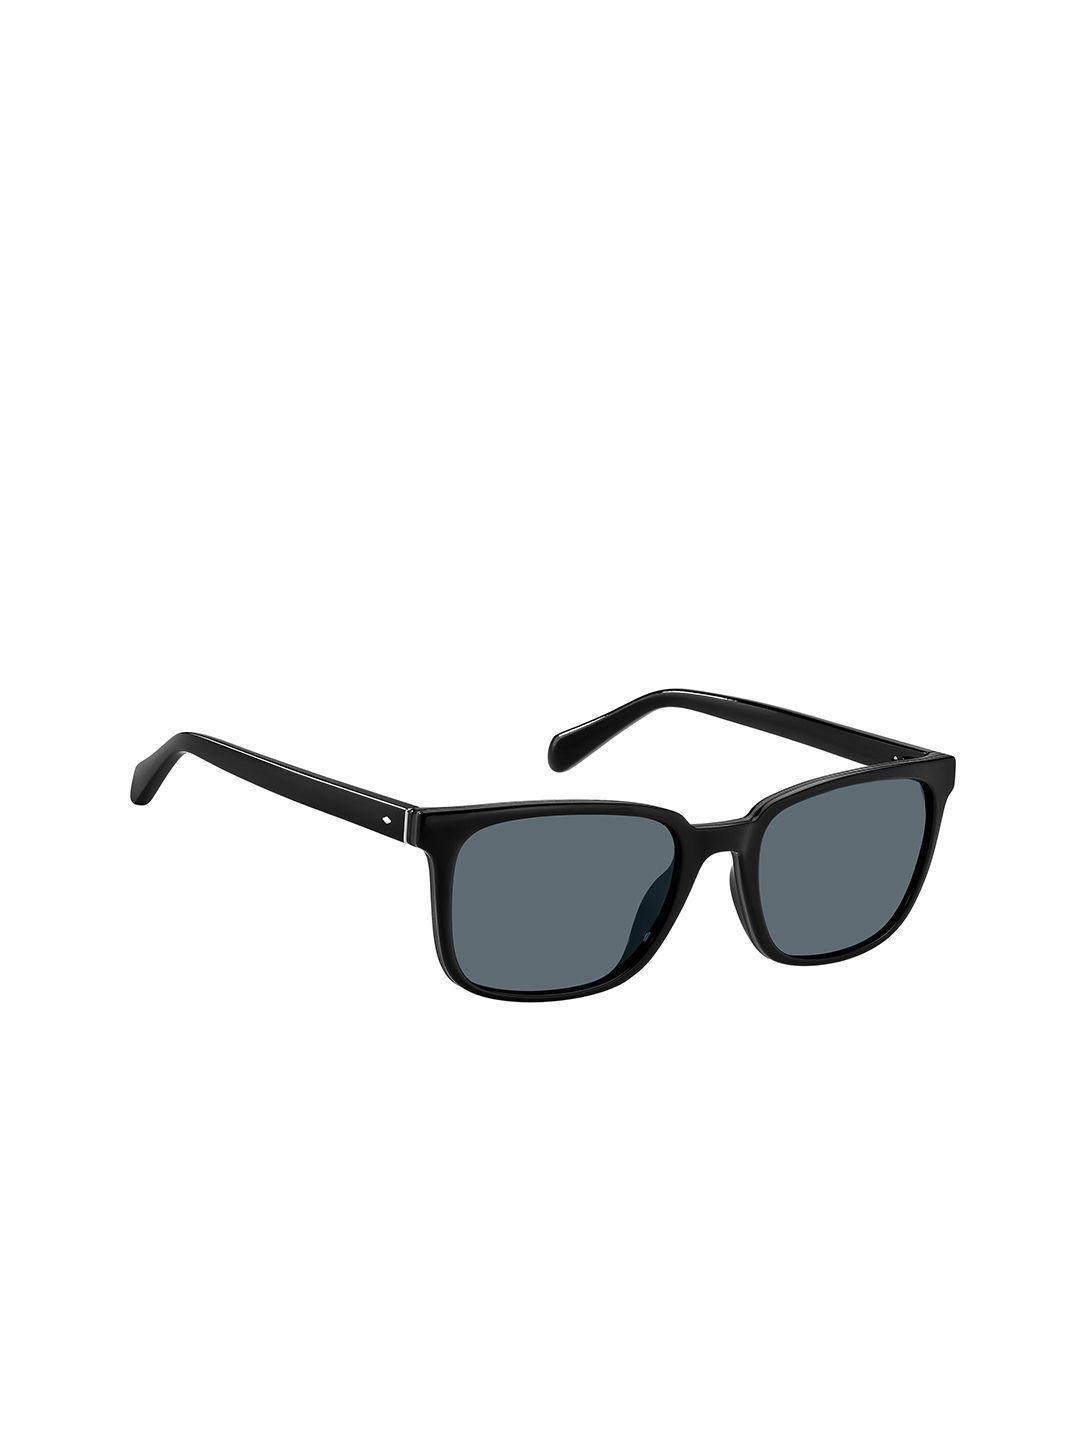 fossil men grey lens & black wayfarer sunglasses with uv protected lens 20320880754ir-grey